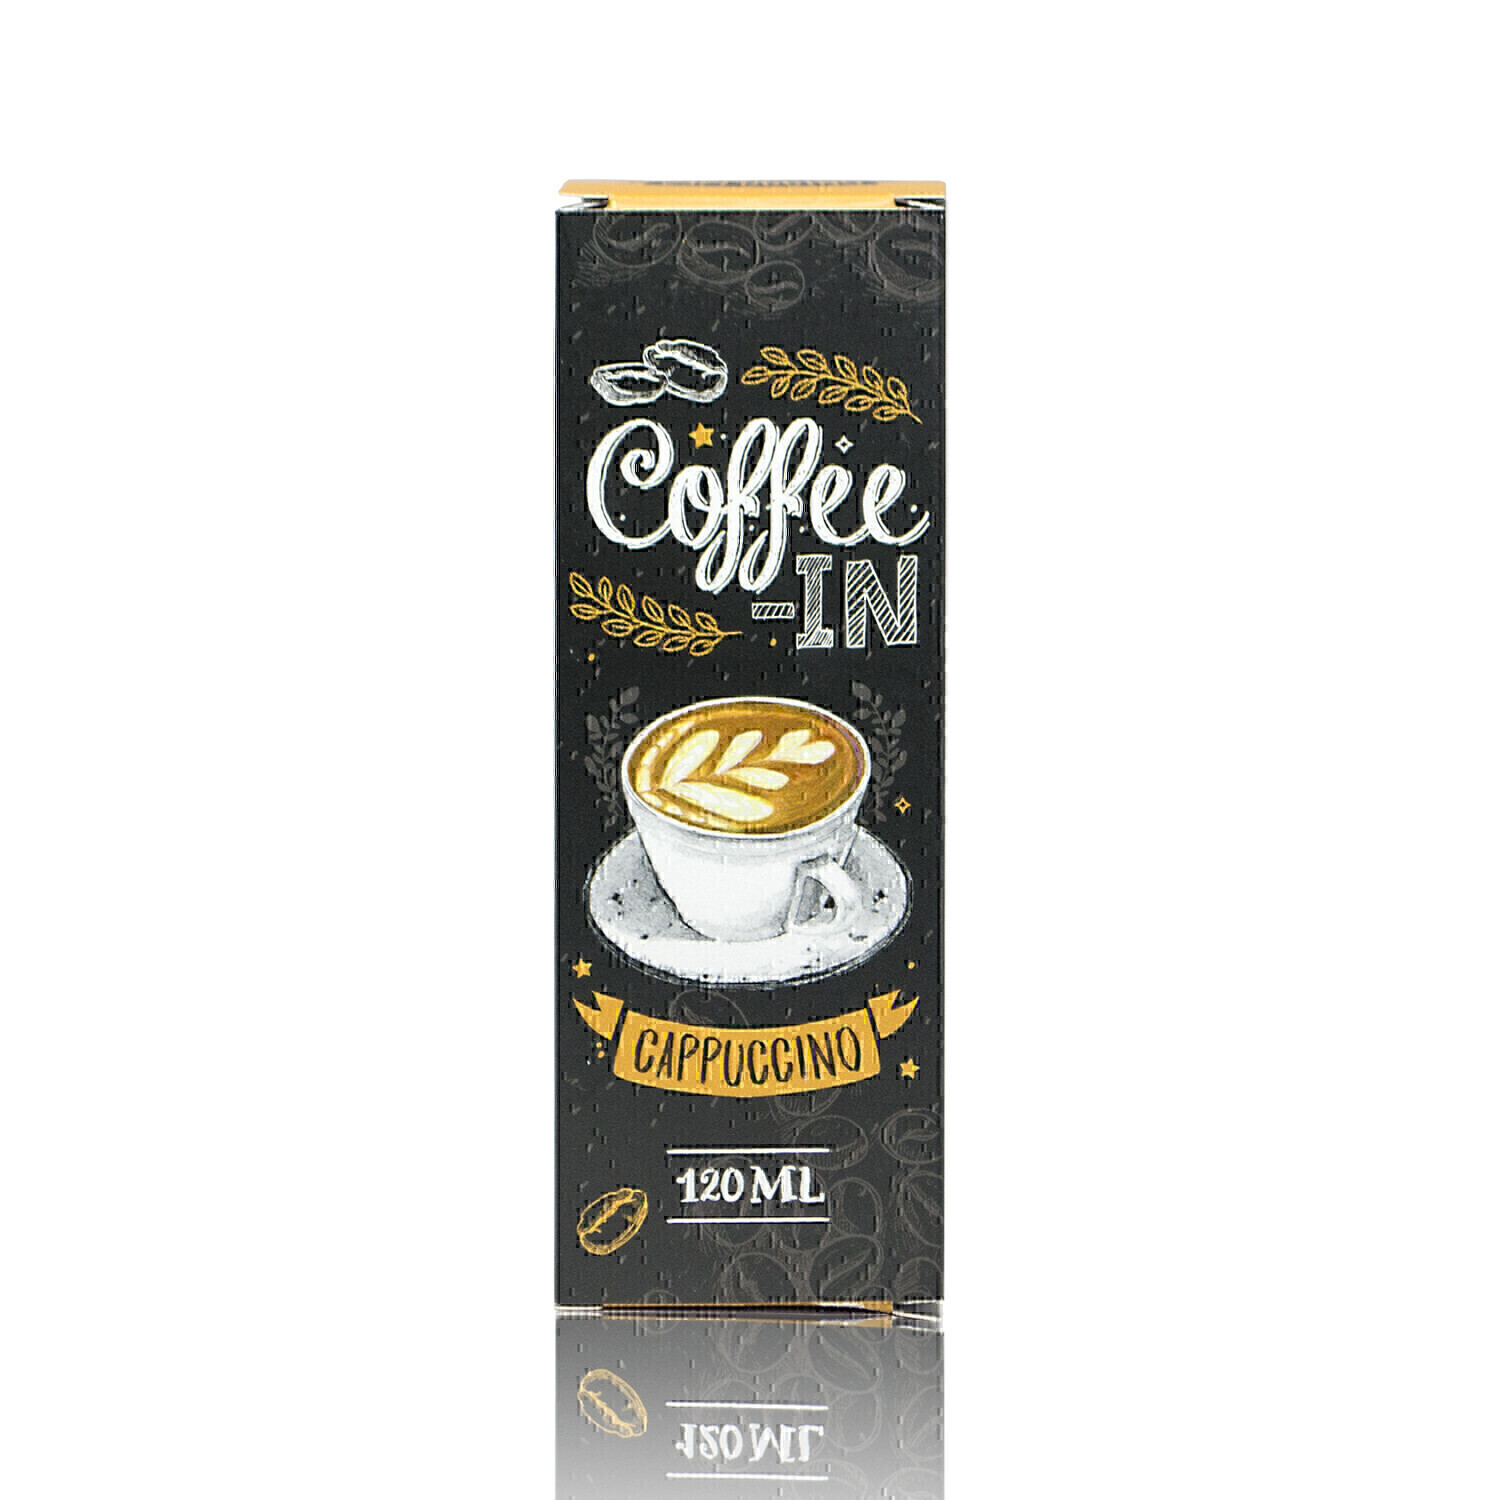 COFFEE-IN SALT: CAPPUCHINO 30ML 20MG STRONG